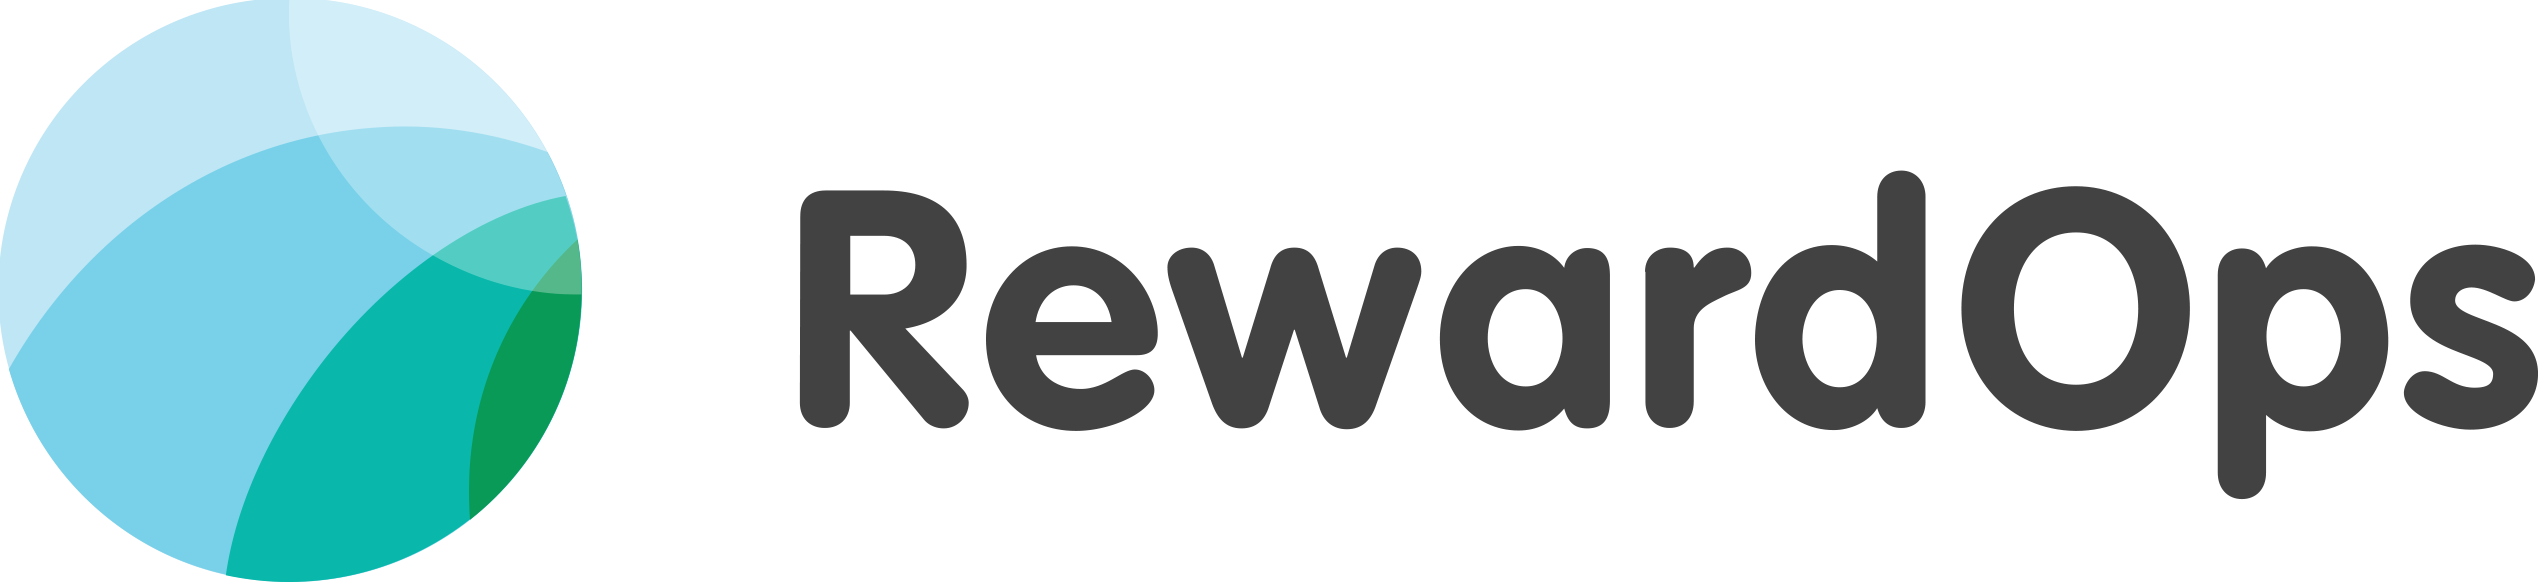 RewardOps logo